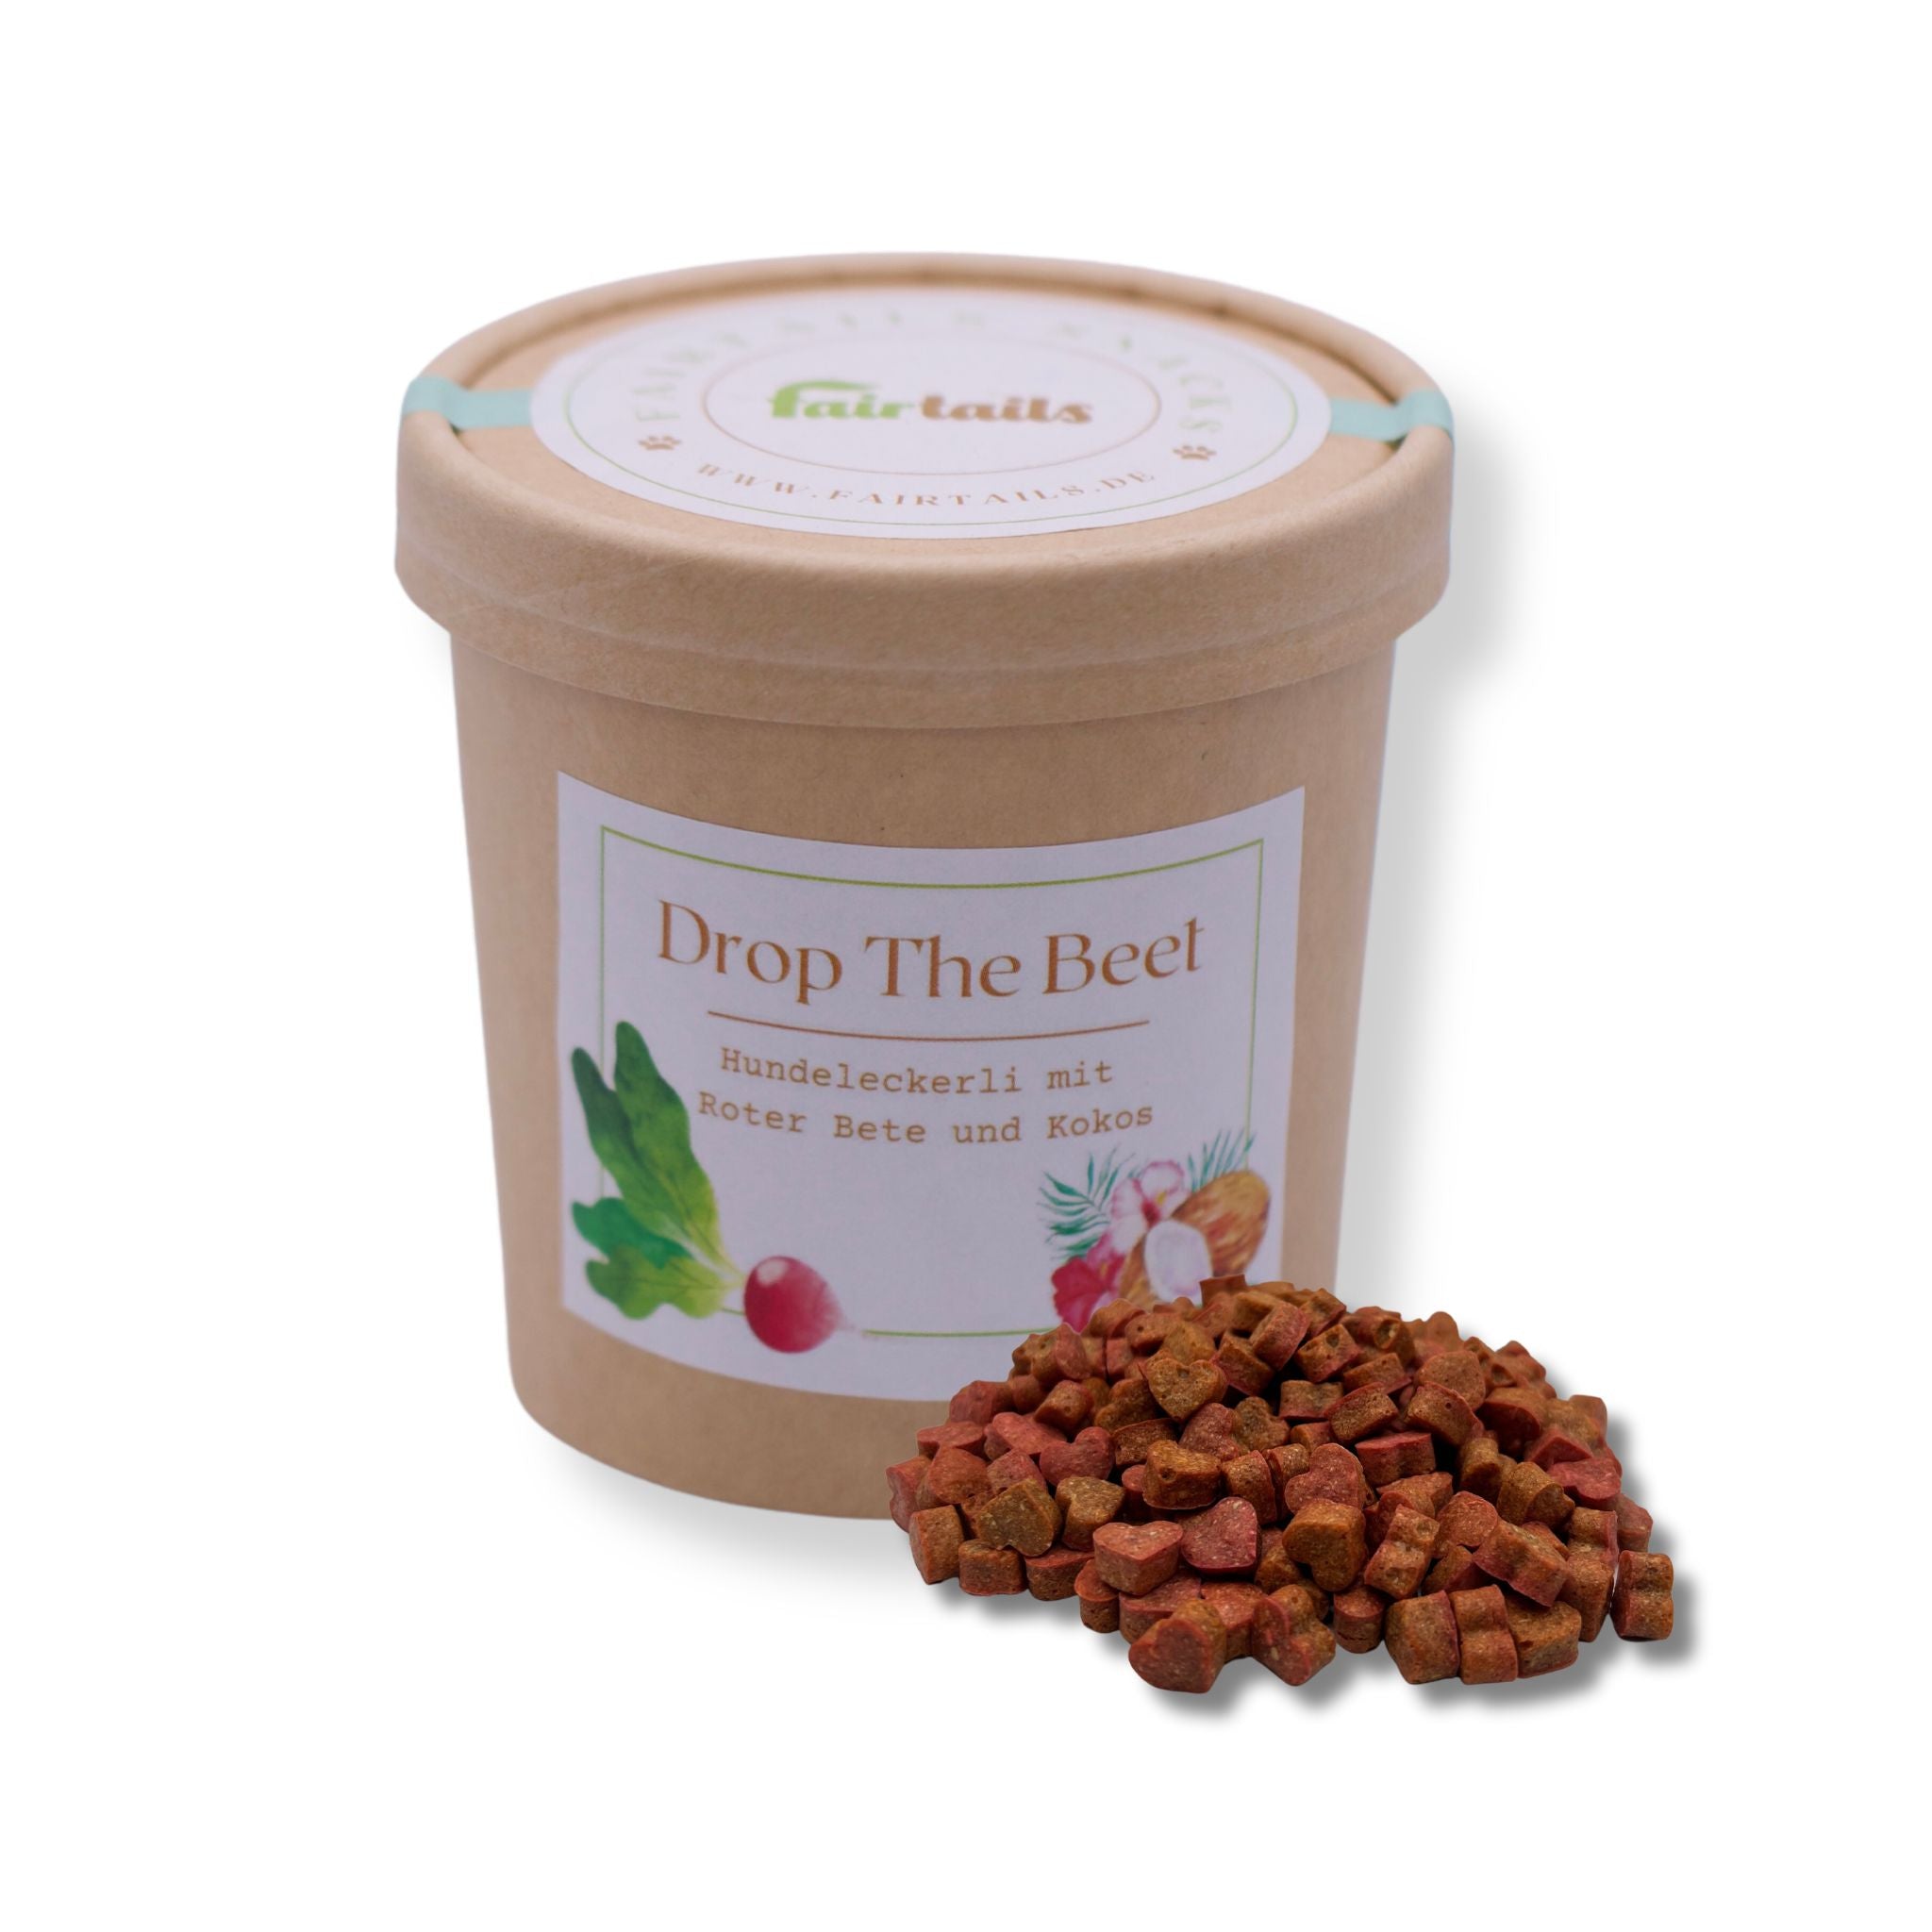 Drop The Beet - Vegane Hundeleckerli Kokos und Roter Bete